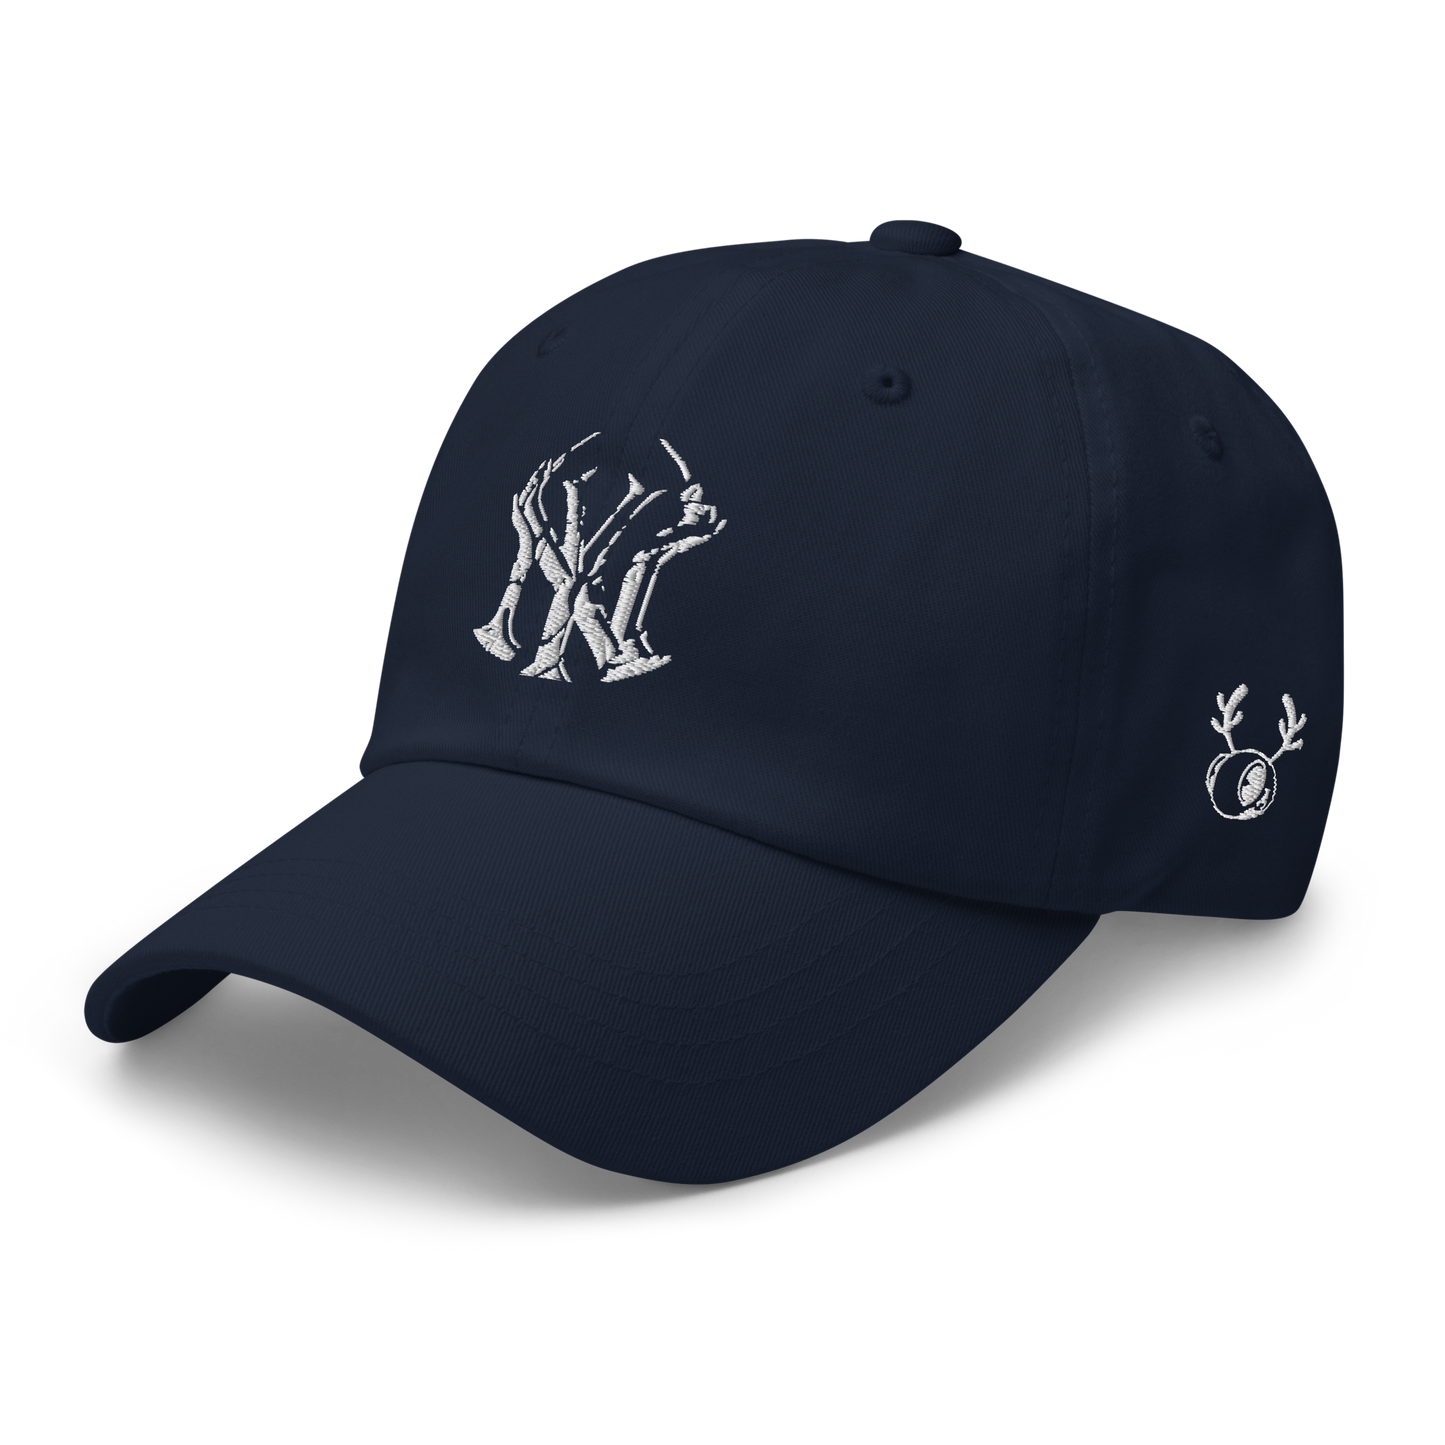 "new york" hat